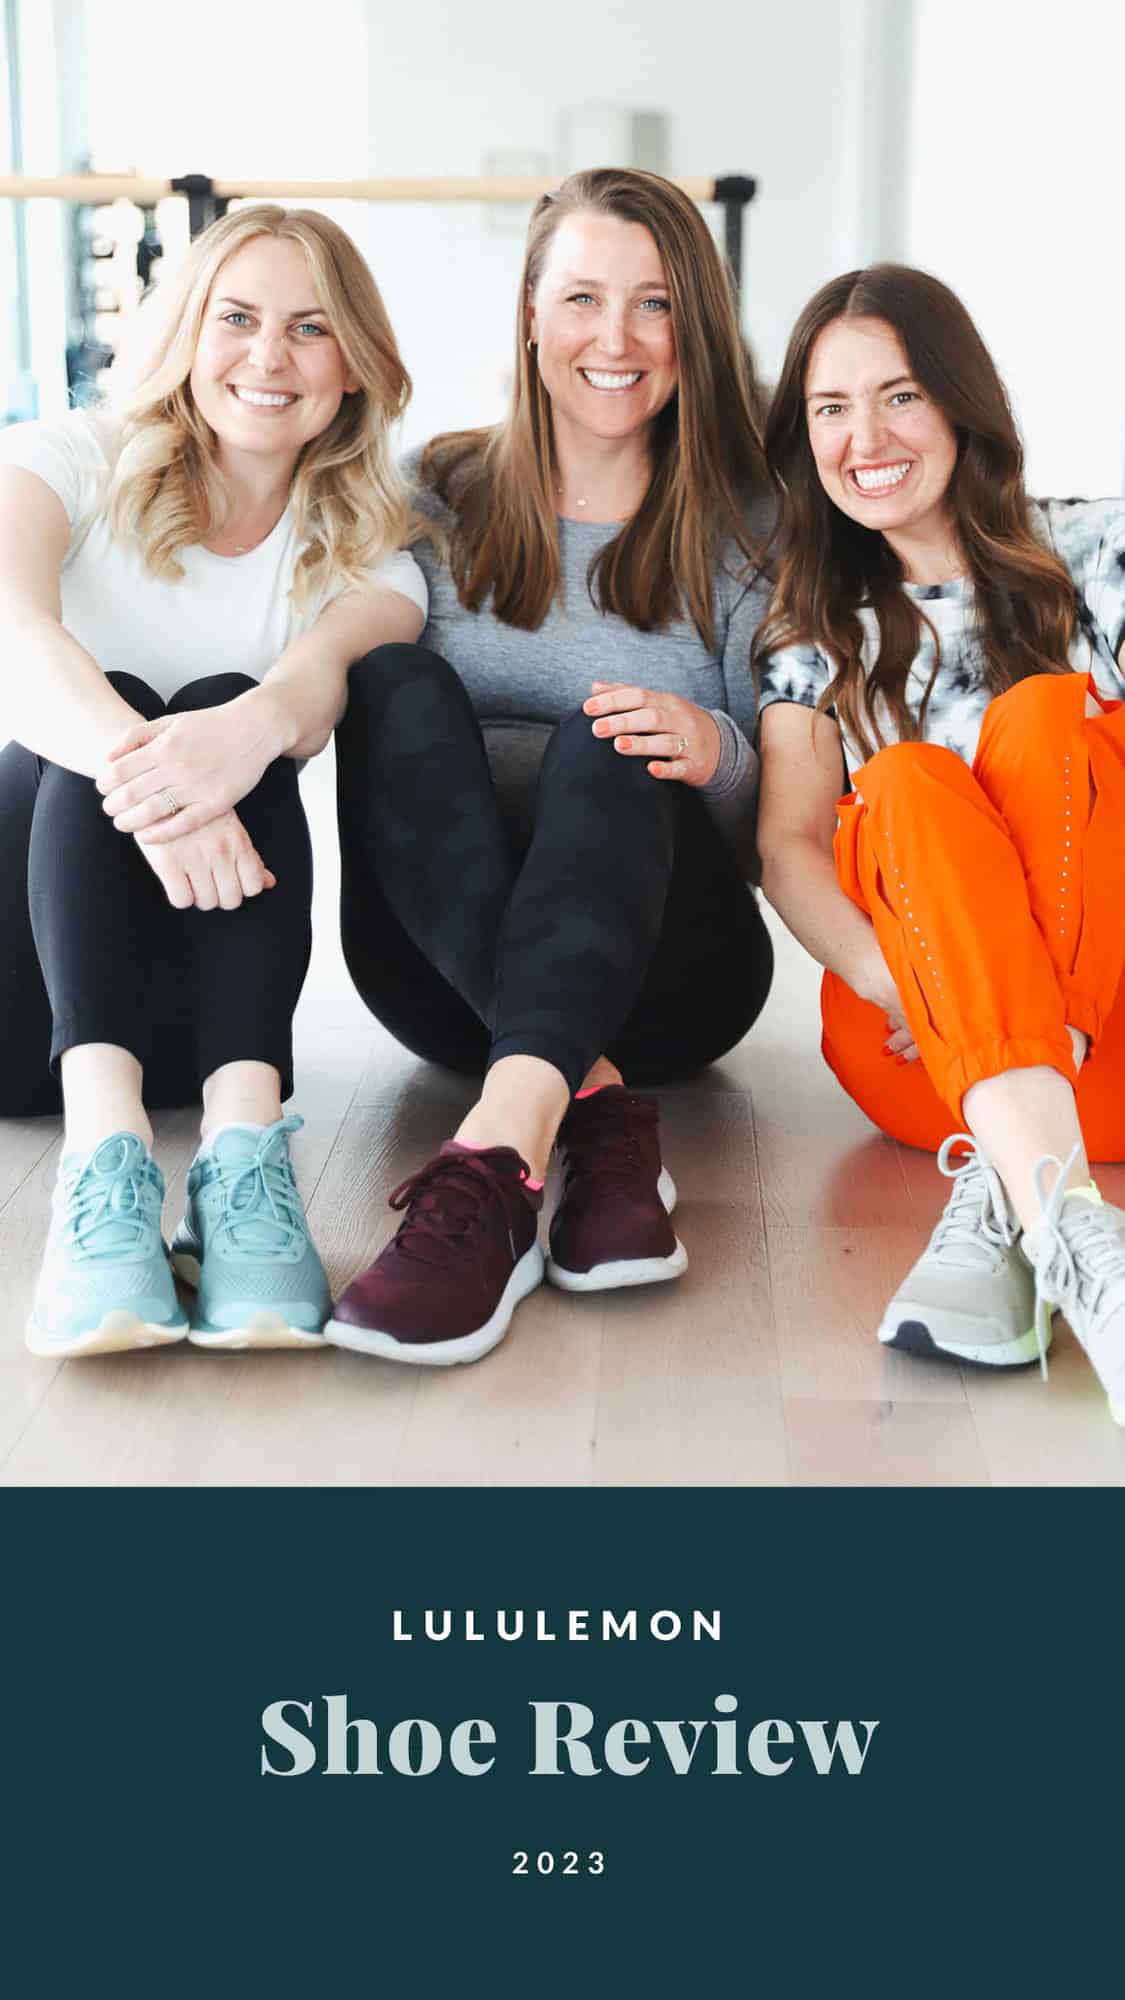 Three women sitting on the floor smiling.